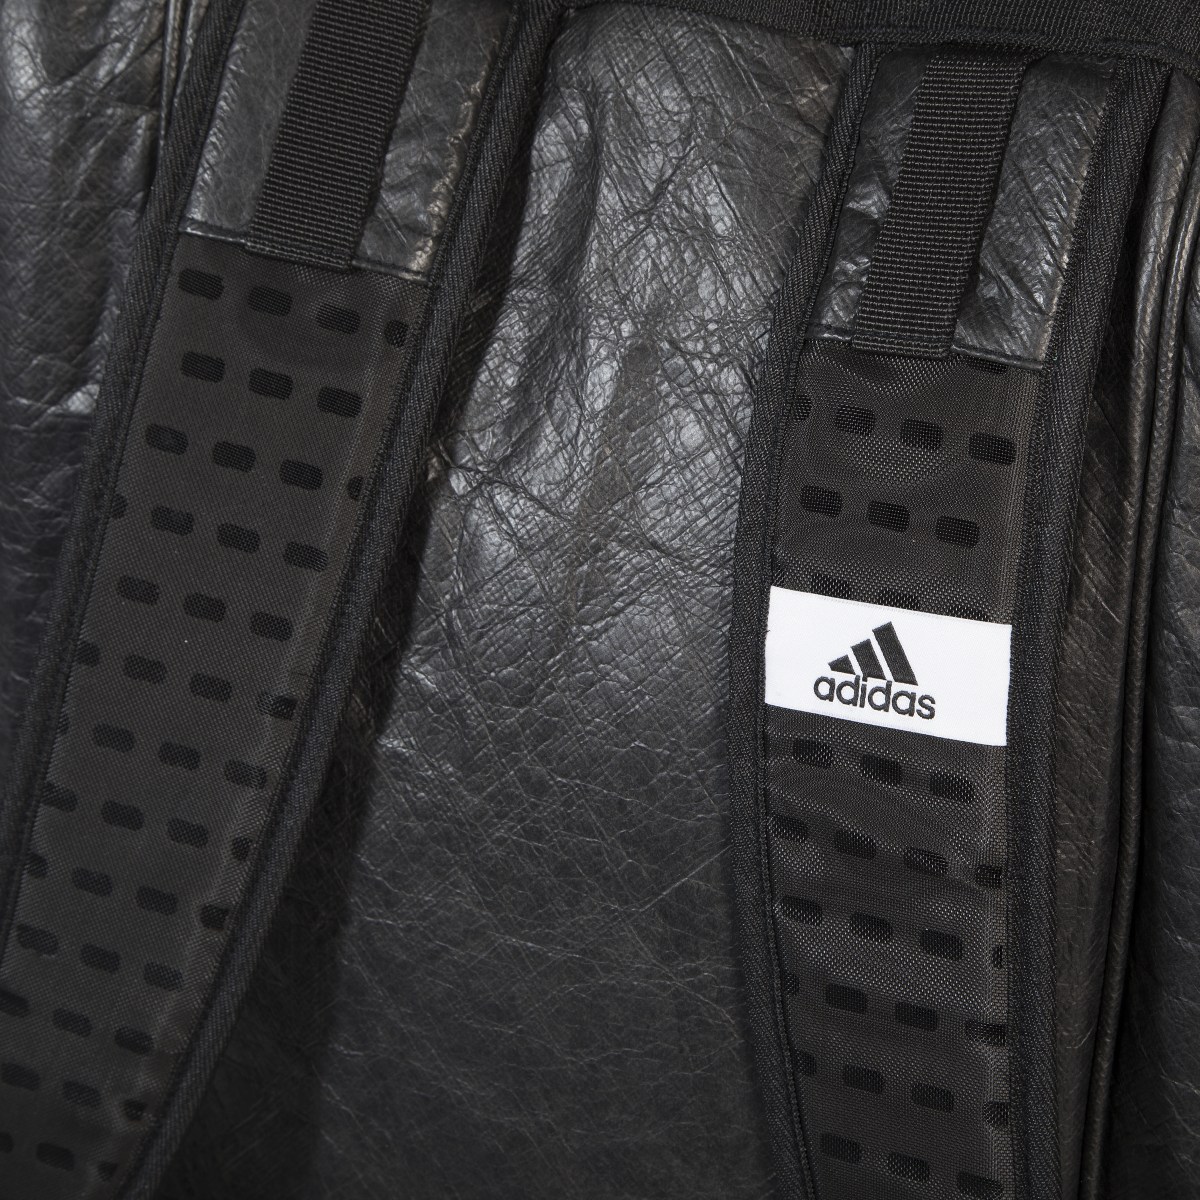 Adidas Multigame Racket Bag. 5